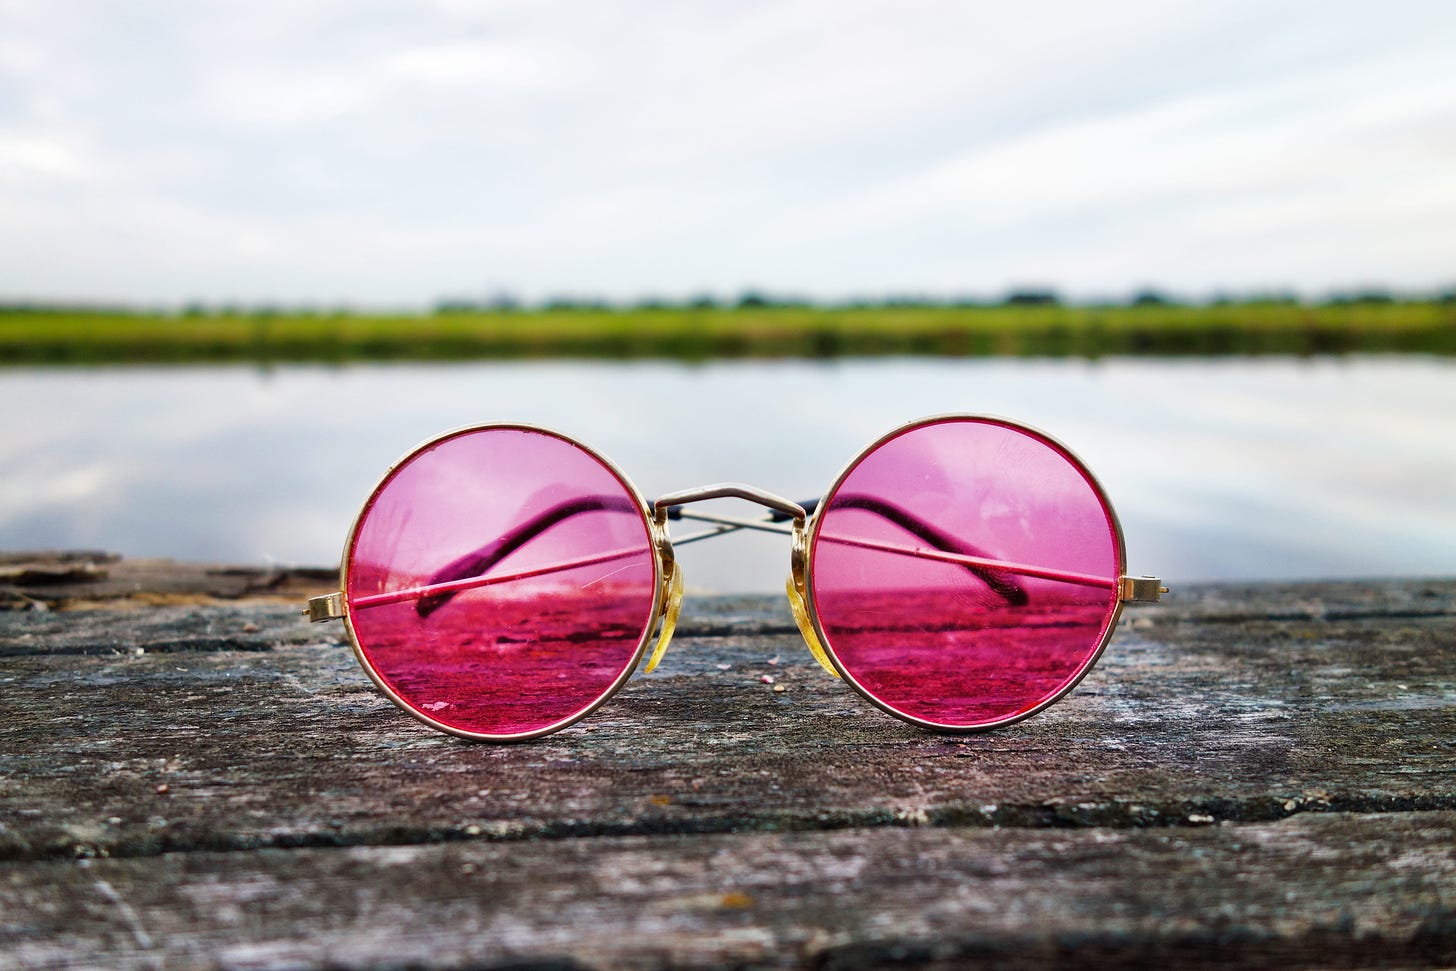 Pir of pink tinted round glasses